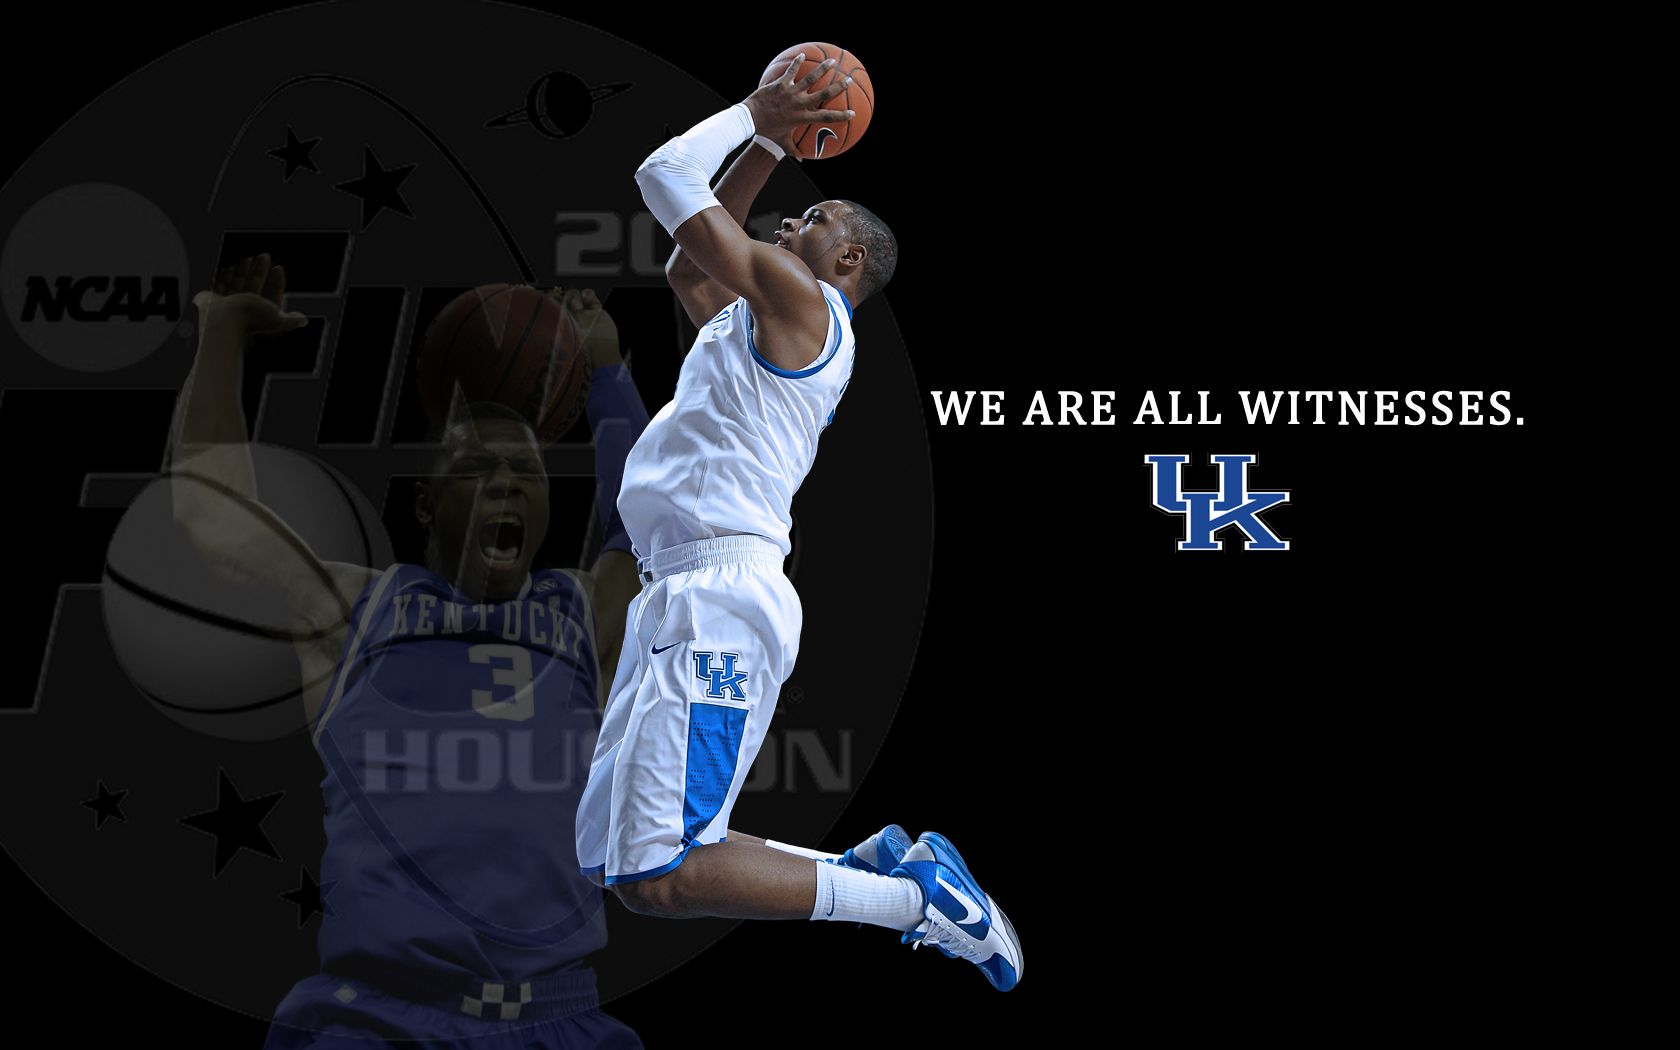 New Kentucky basketball wallpaper uploaded